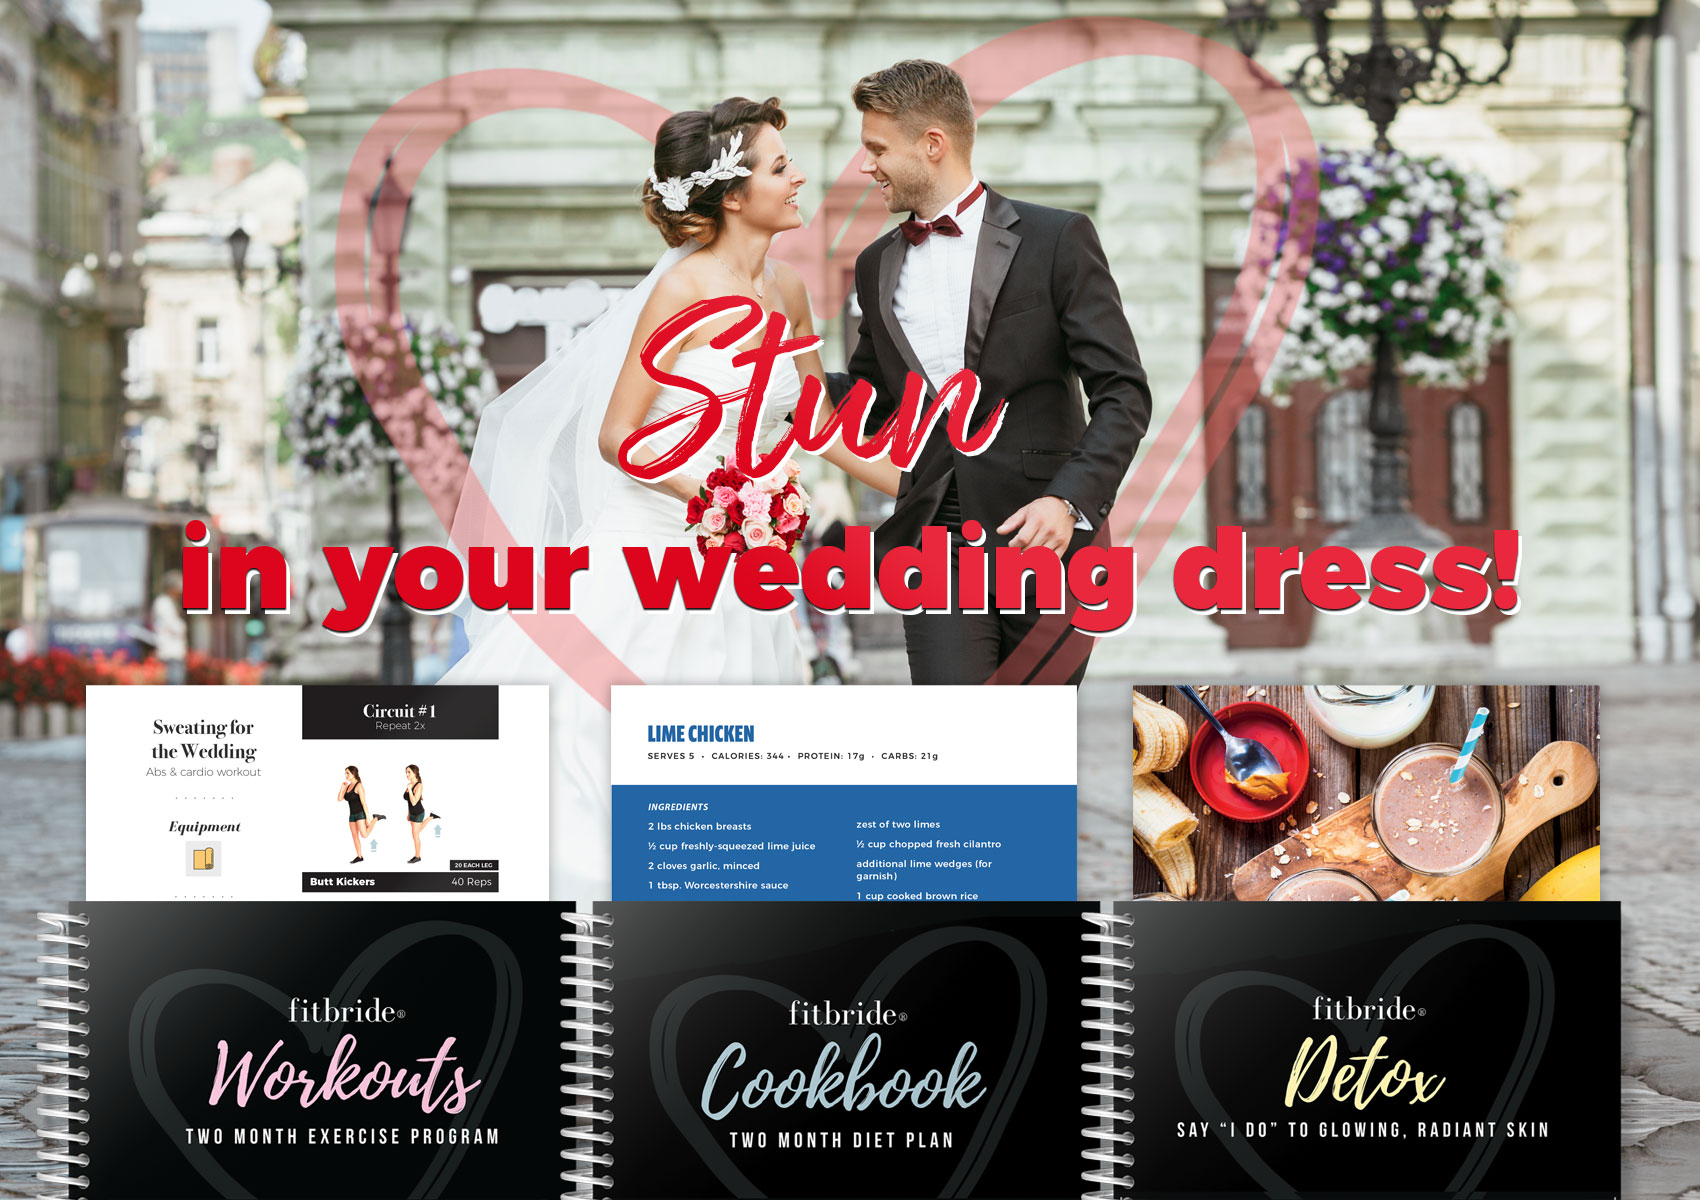 Stun in your wedding dress!